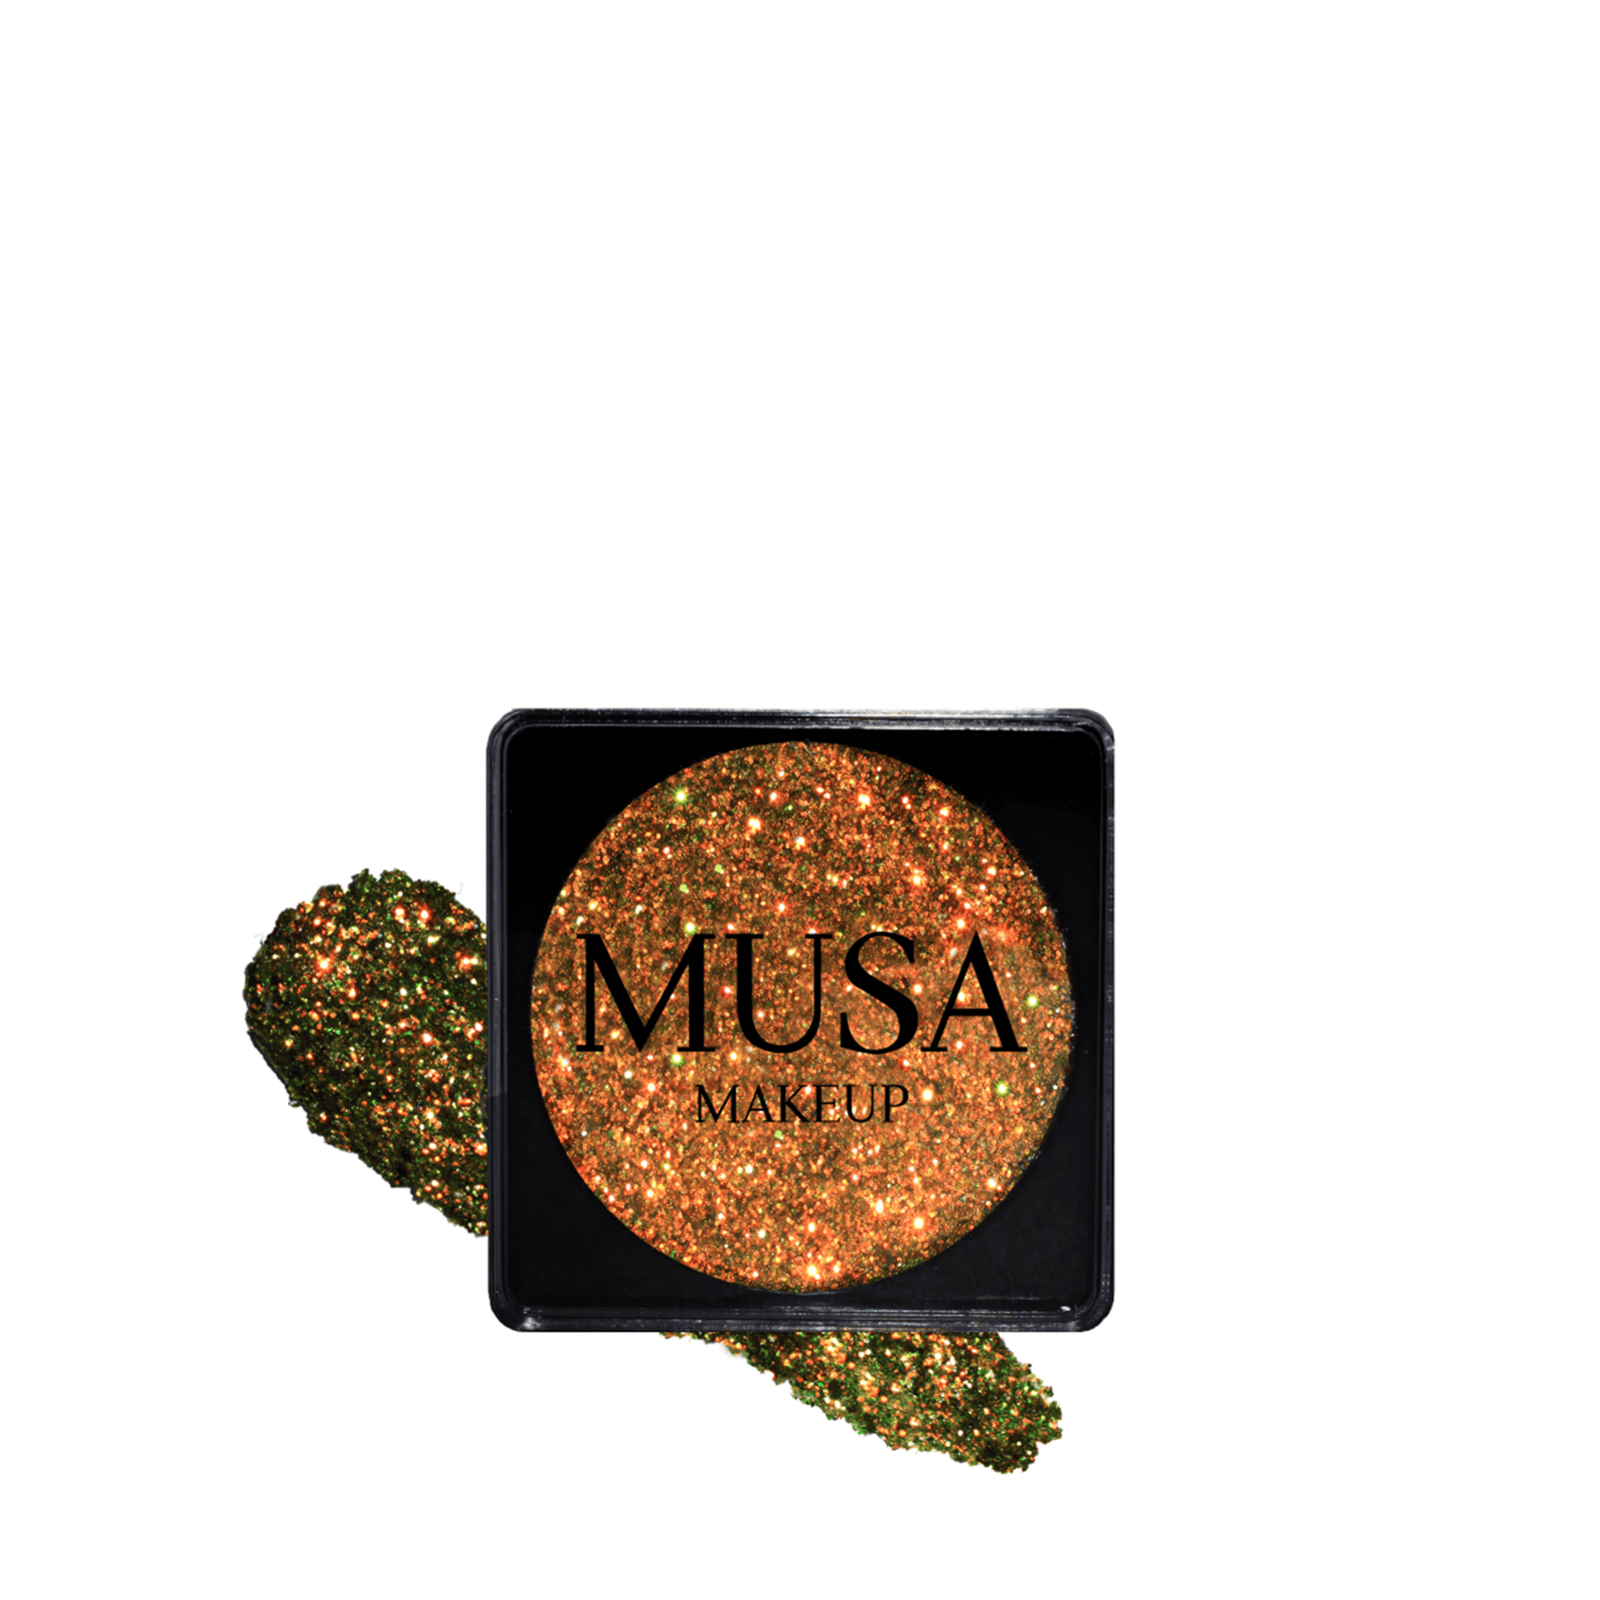 MUSA Makeup Creamy Glitter Eve's Apple 4g